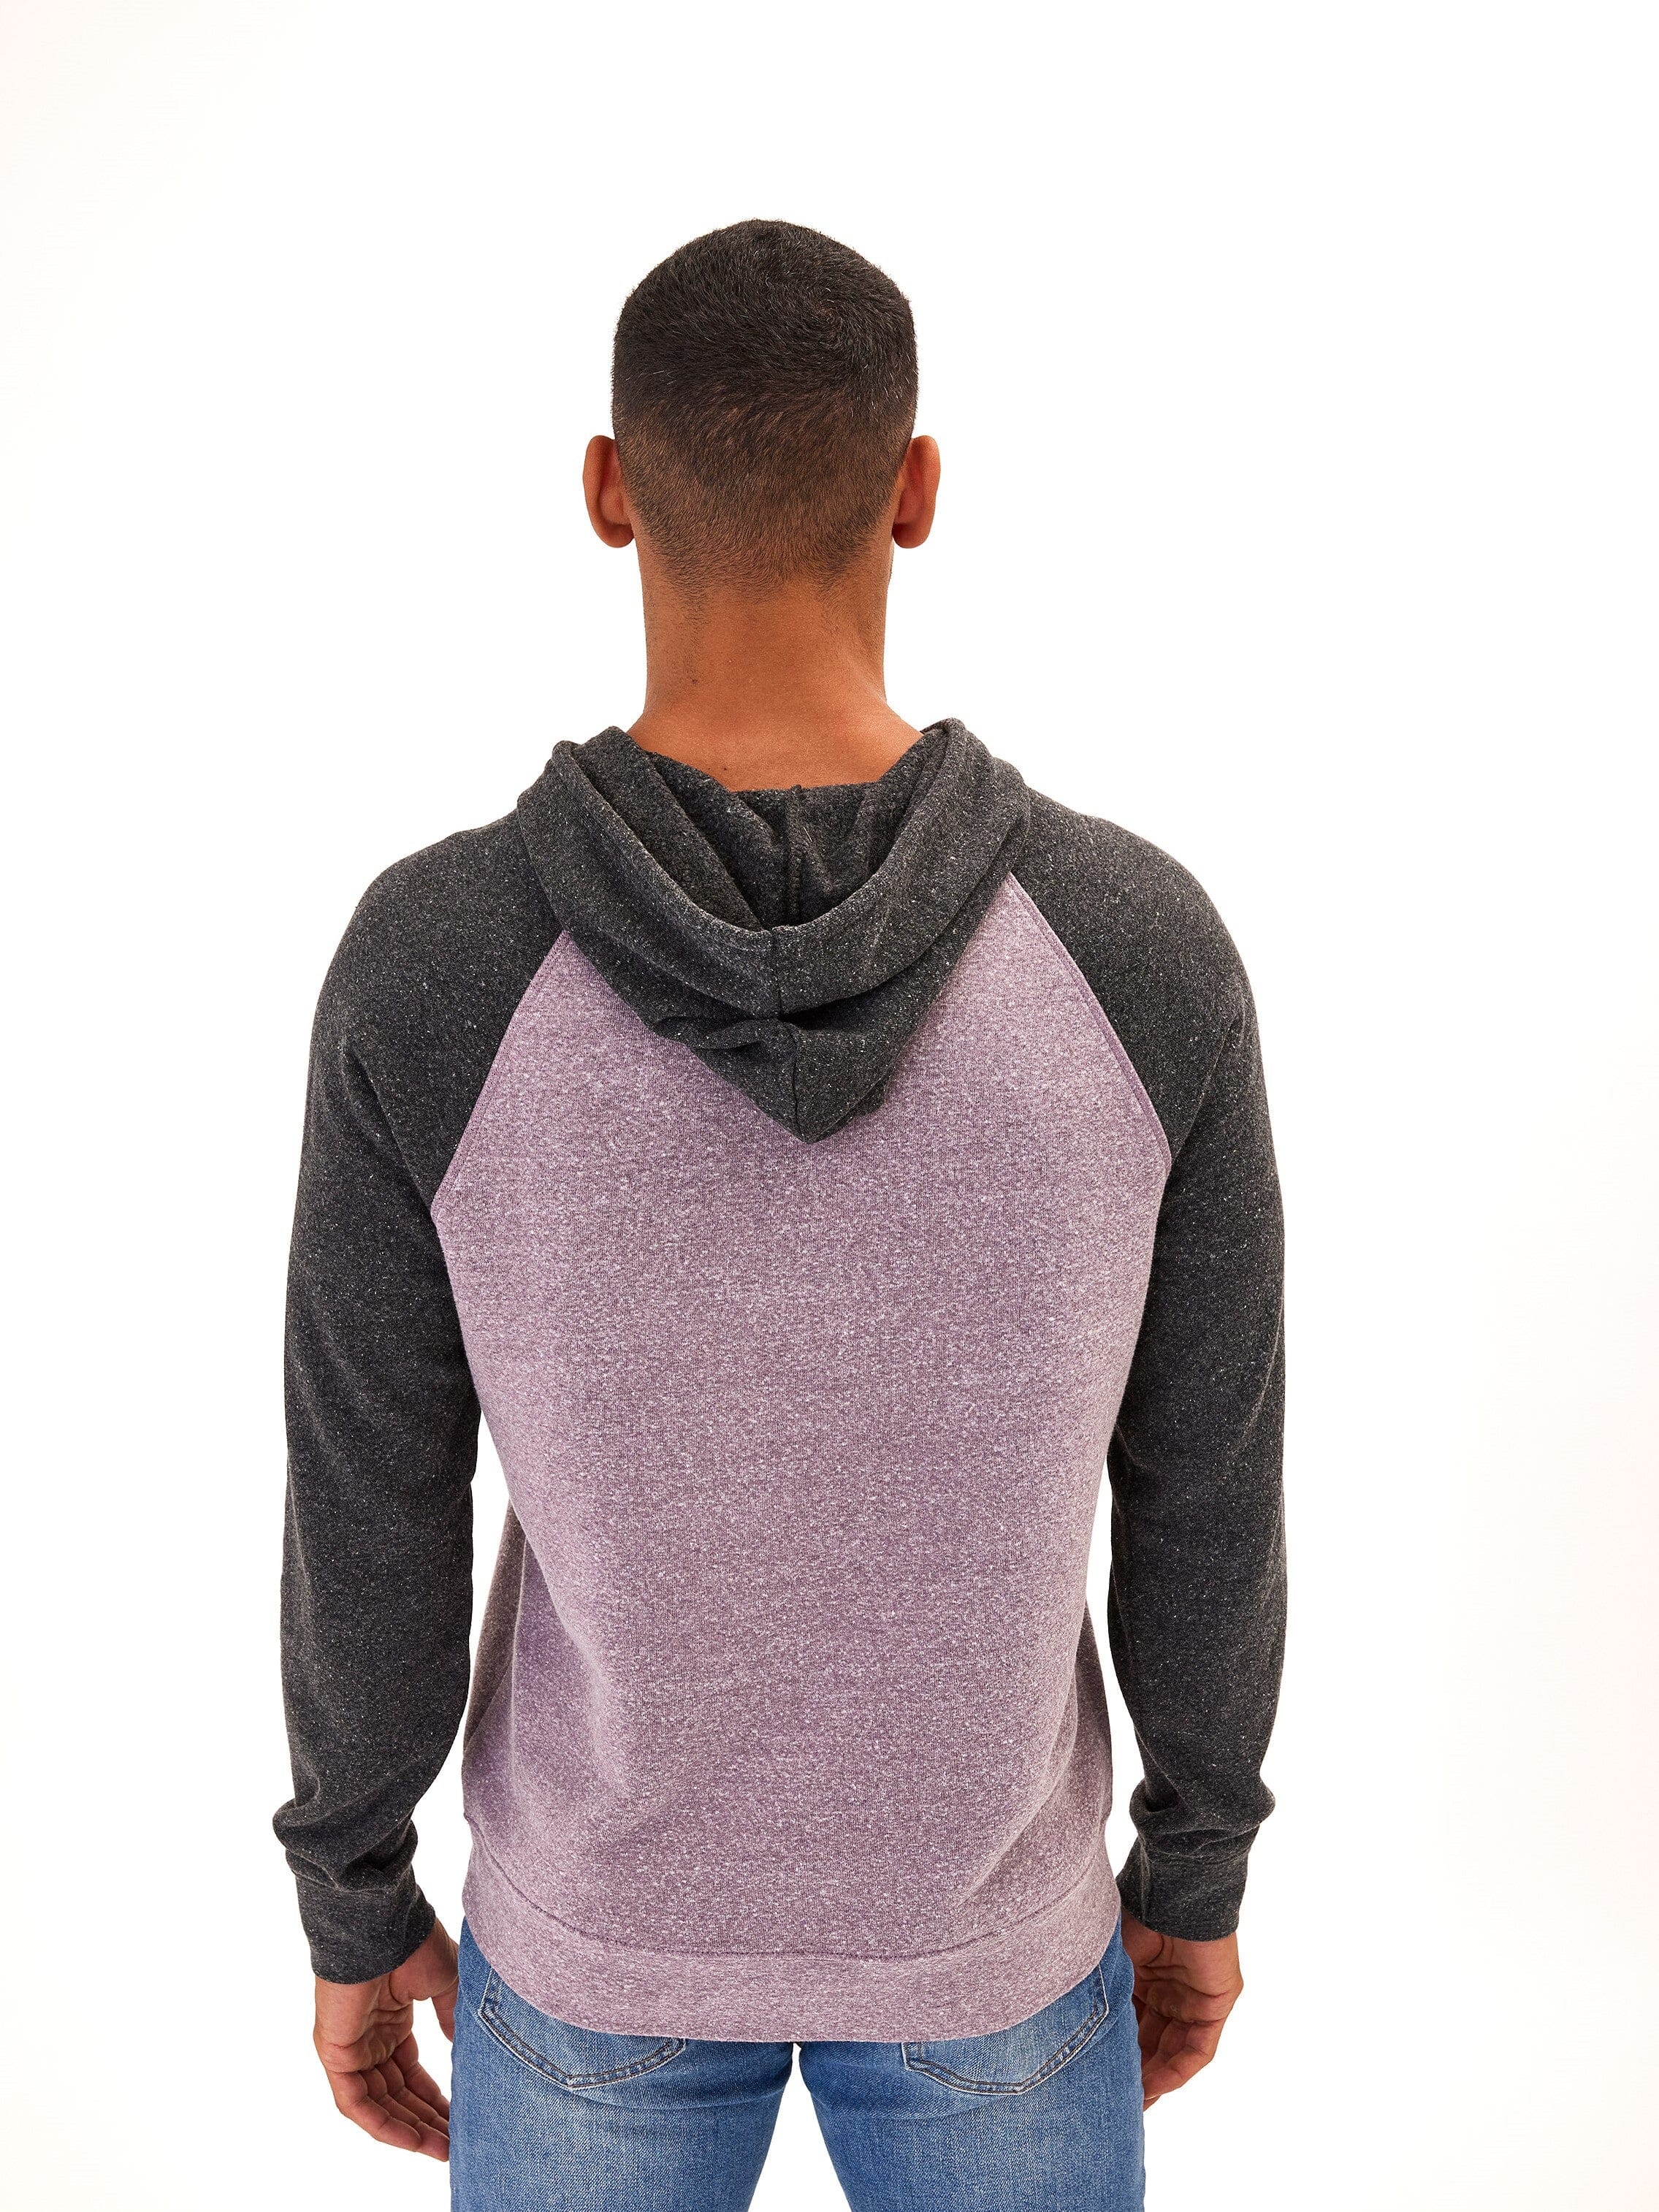 Triblend Fleece Colorblock Raglan Hoodie Mens Outerwear Sweatshirt Threads 4 Thought 